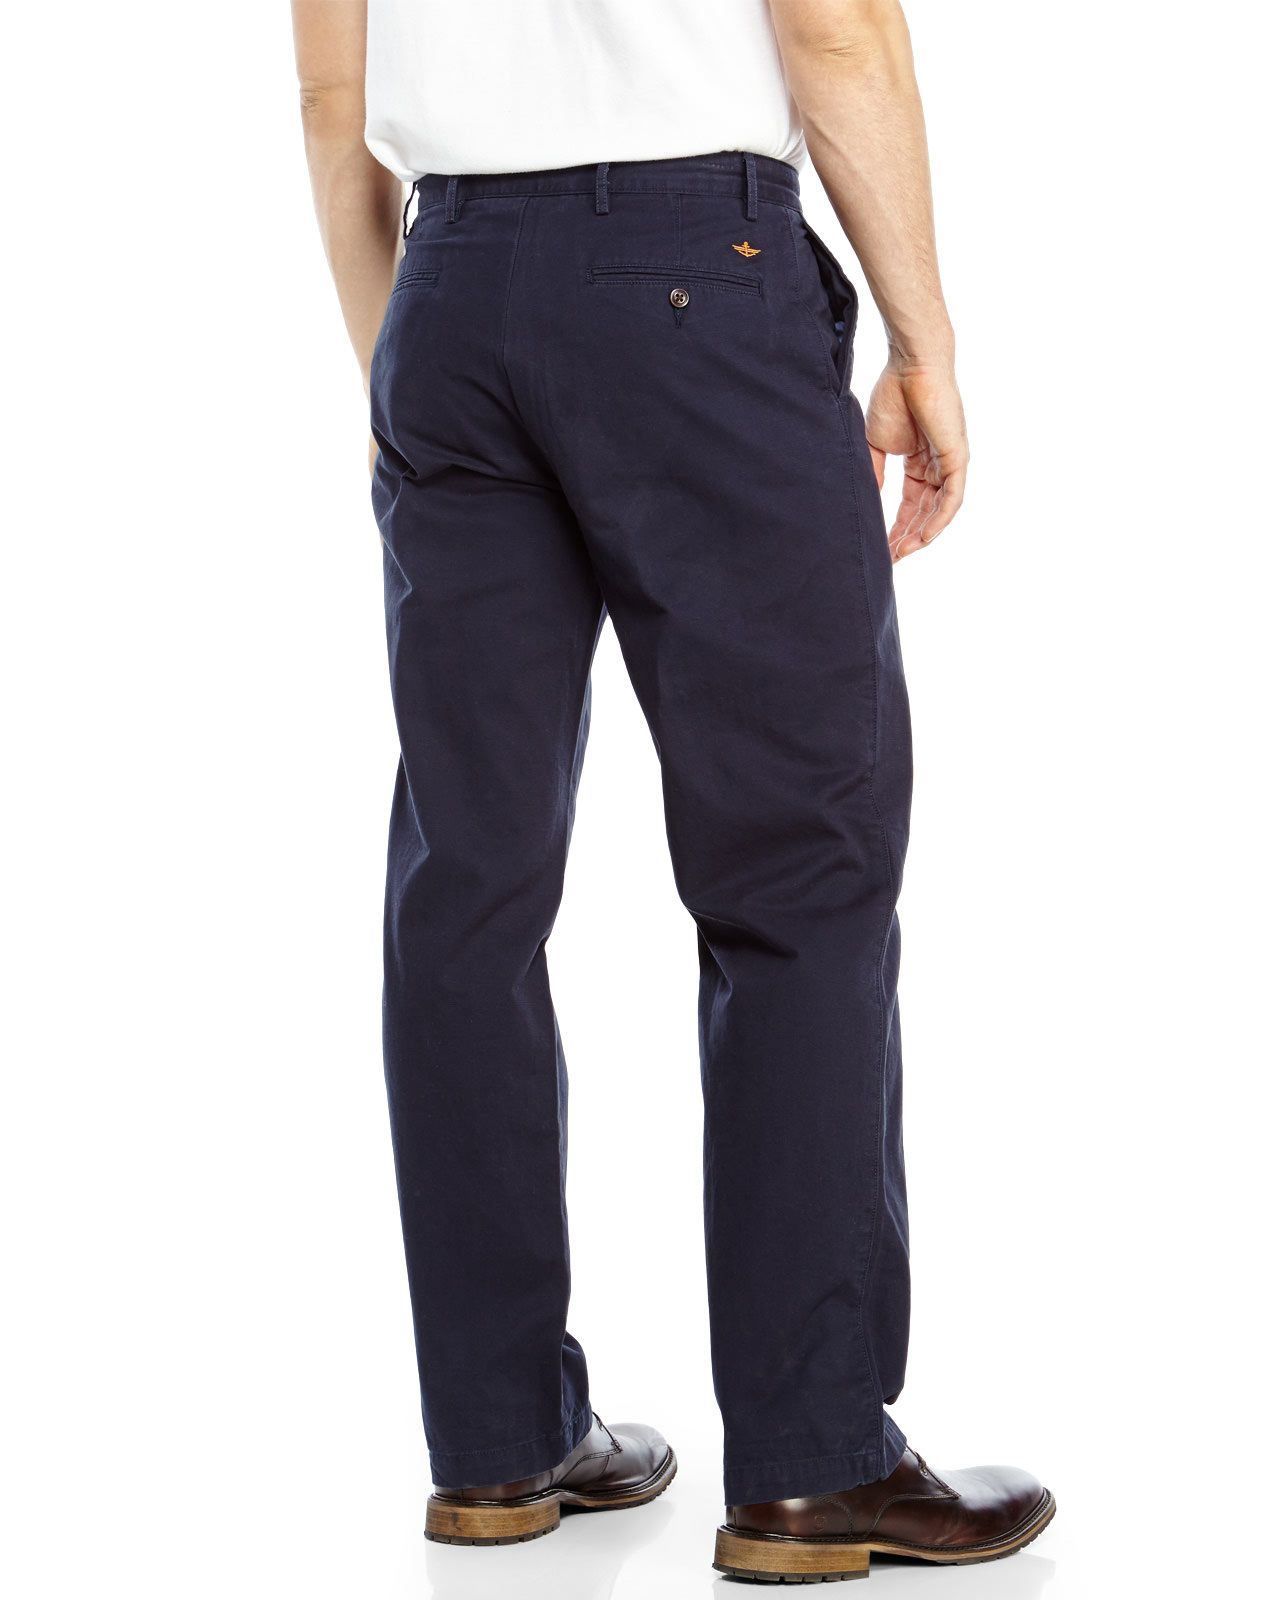 Navy Blue Khaki Pants | Pant So